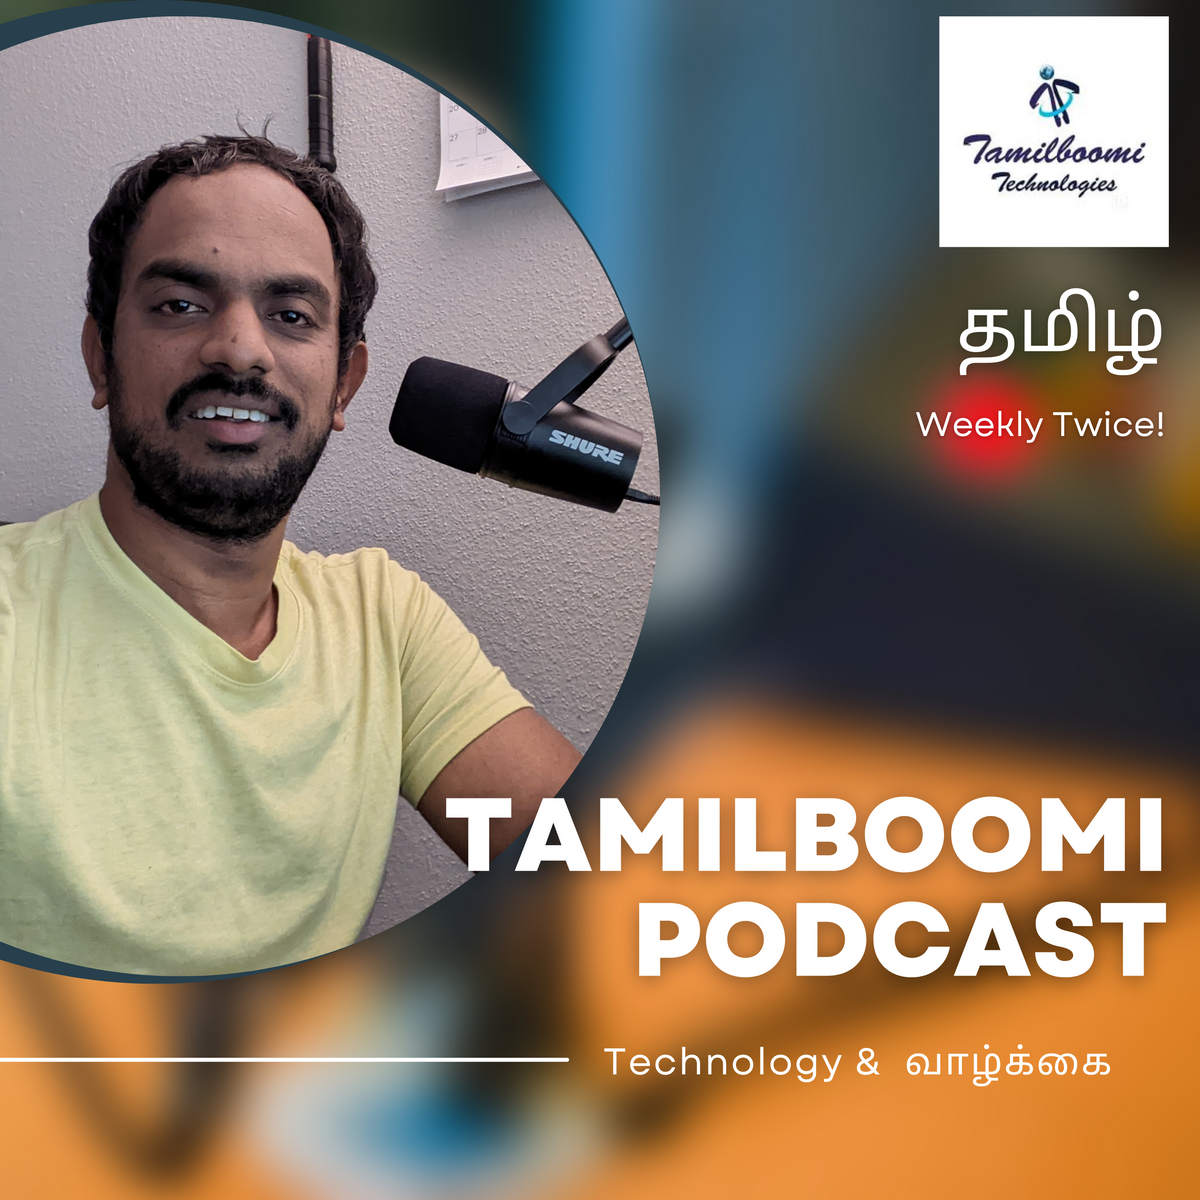 Tamilboomi's Story Podcast